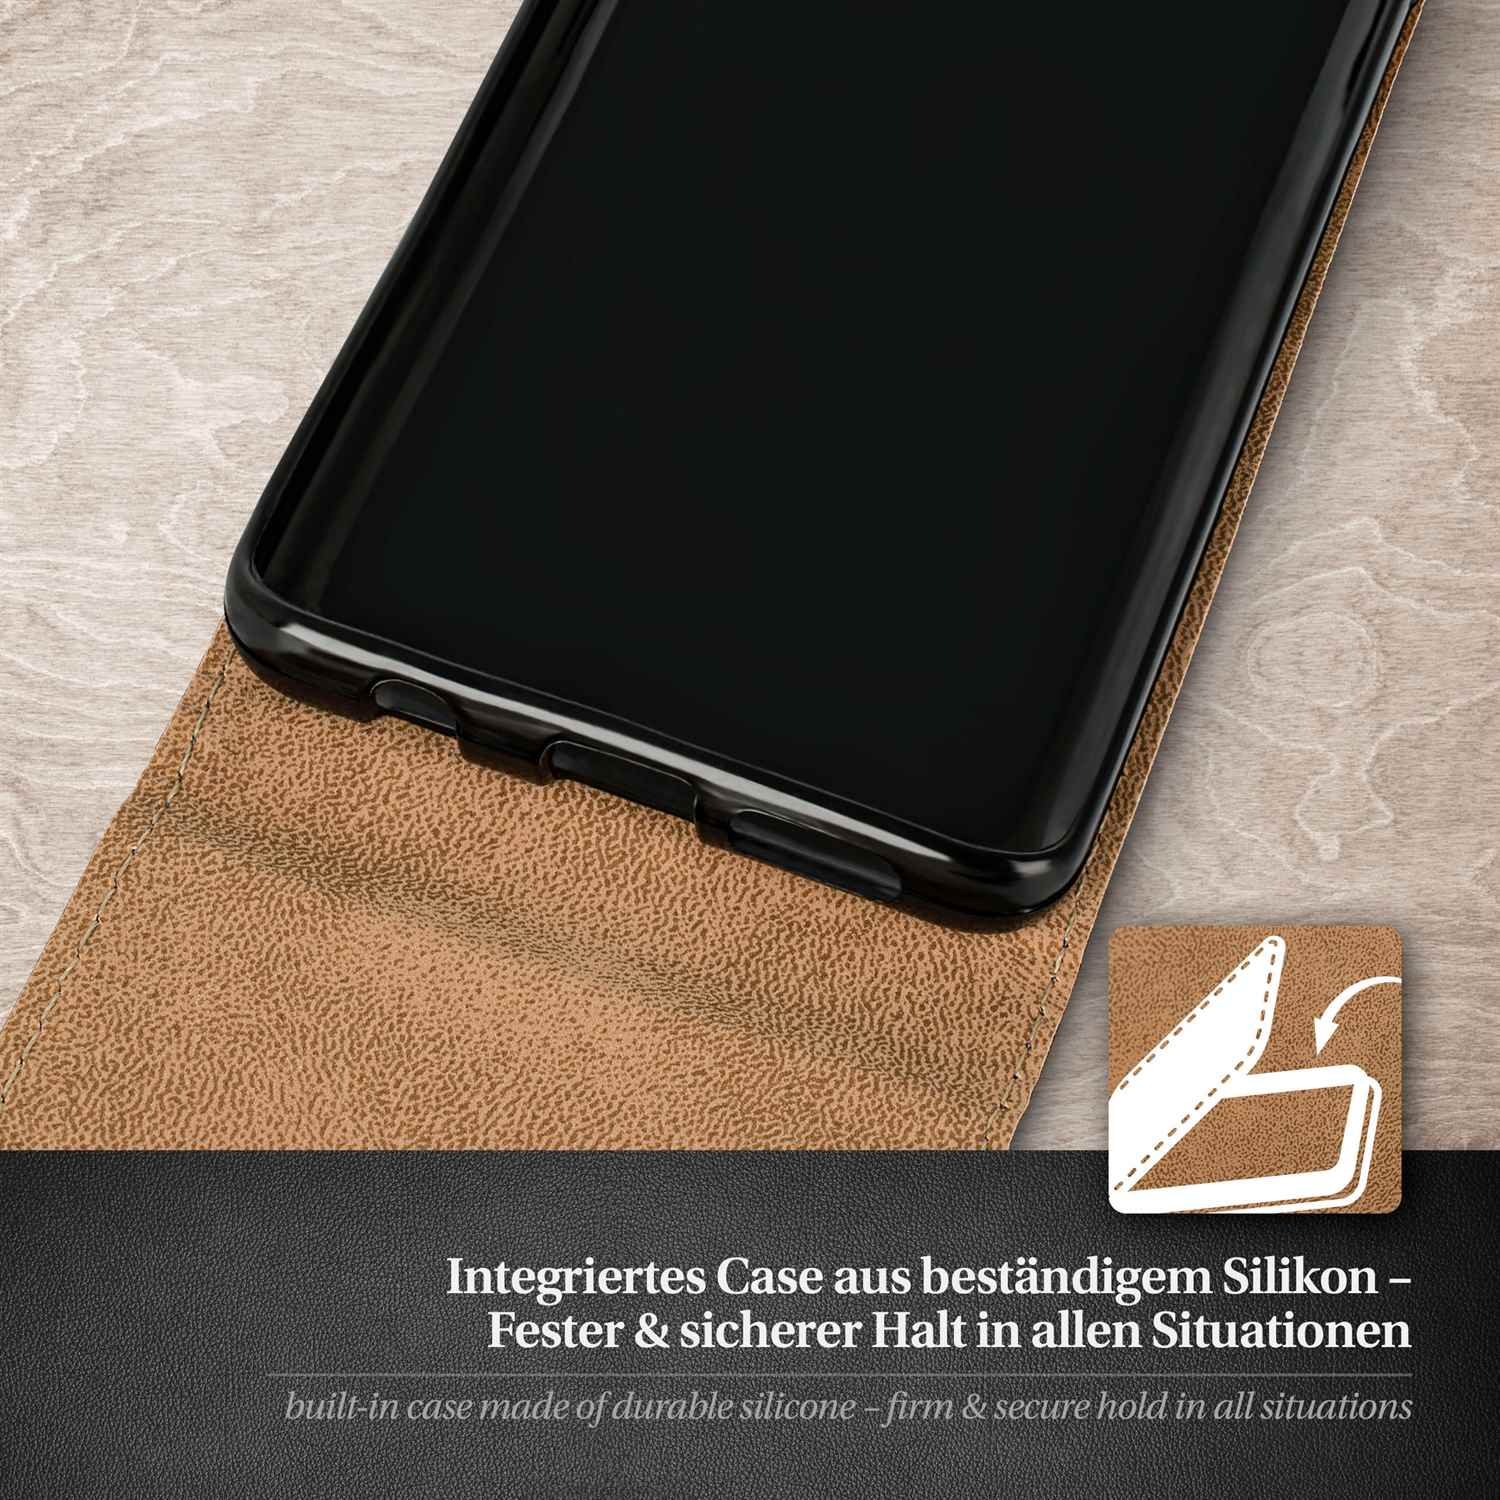 MOEX Flip Case, 6s Oxide-Brown Cover, Apple, iPhone Plus, Flip